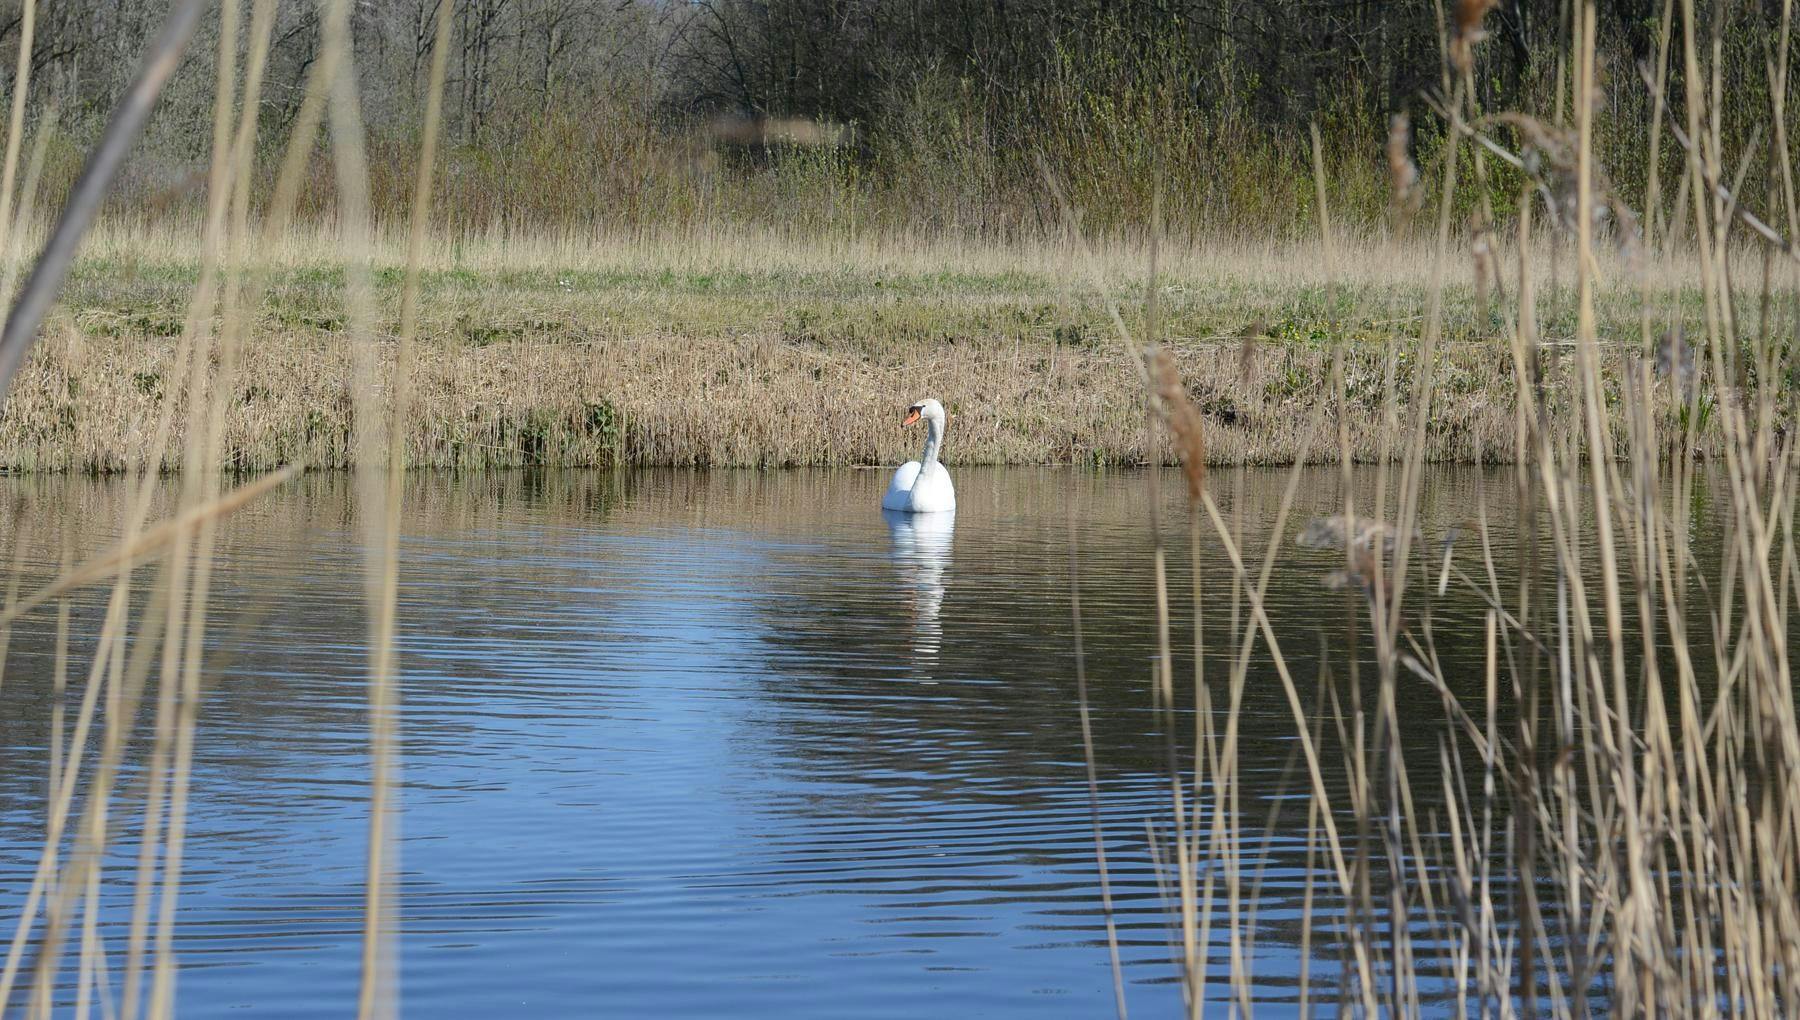 A swan in water at the Amsterdamse Bos, Amstelveen